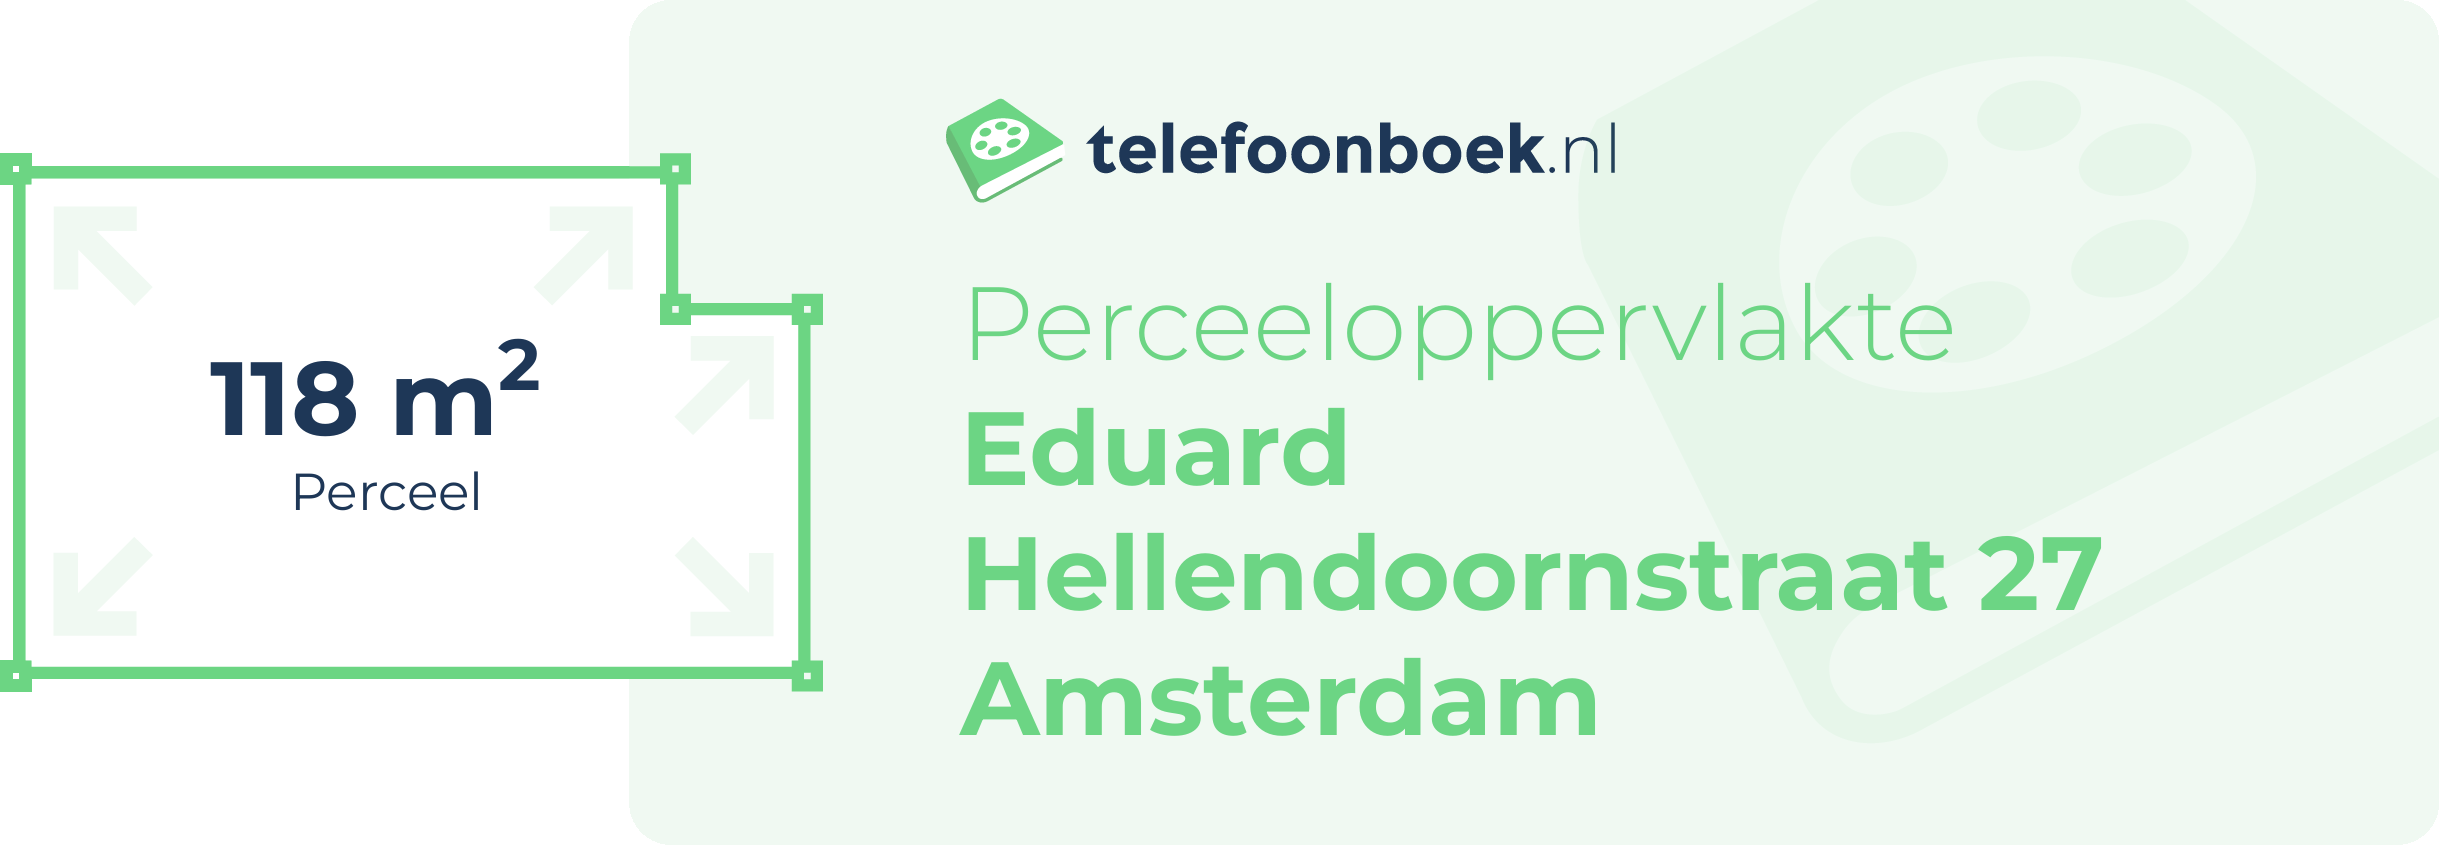 Perceeloppervlakte Eduard Hellendoornstraat 27 Amsterdam